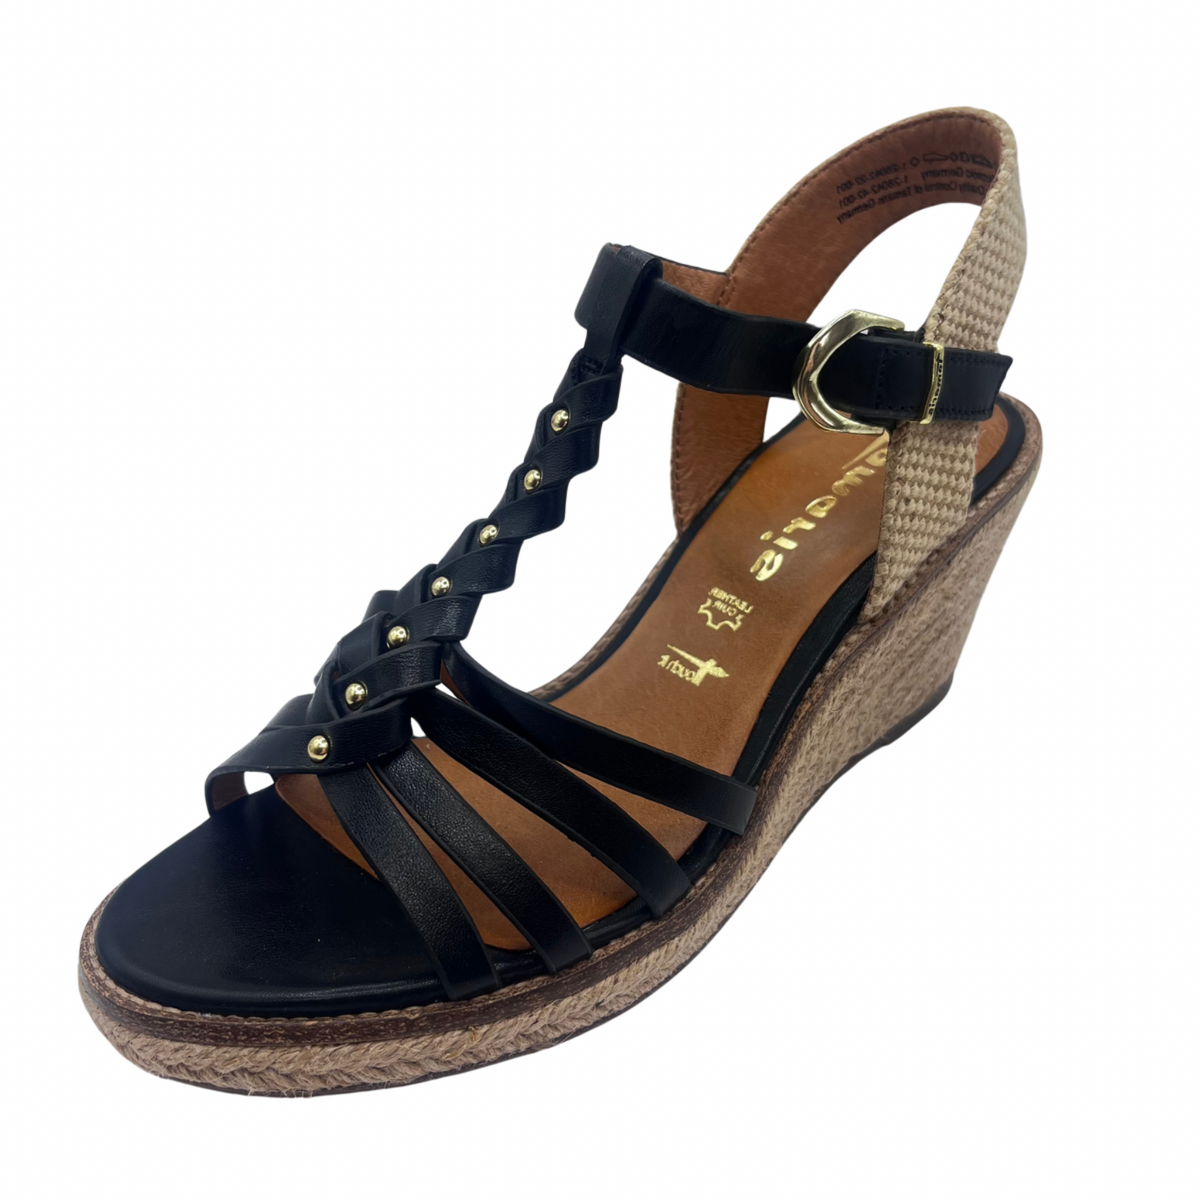 Tamaris Black Leather Wedge Sandal